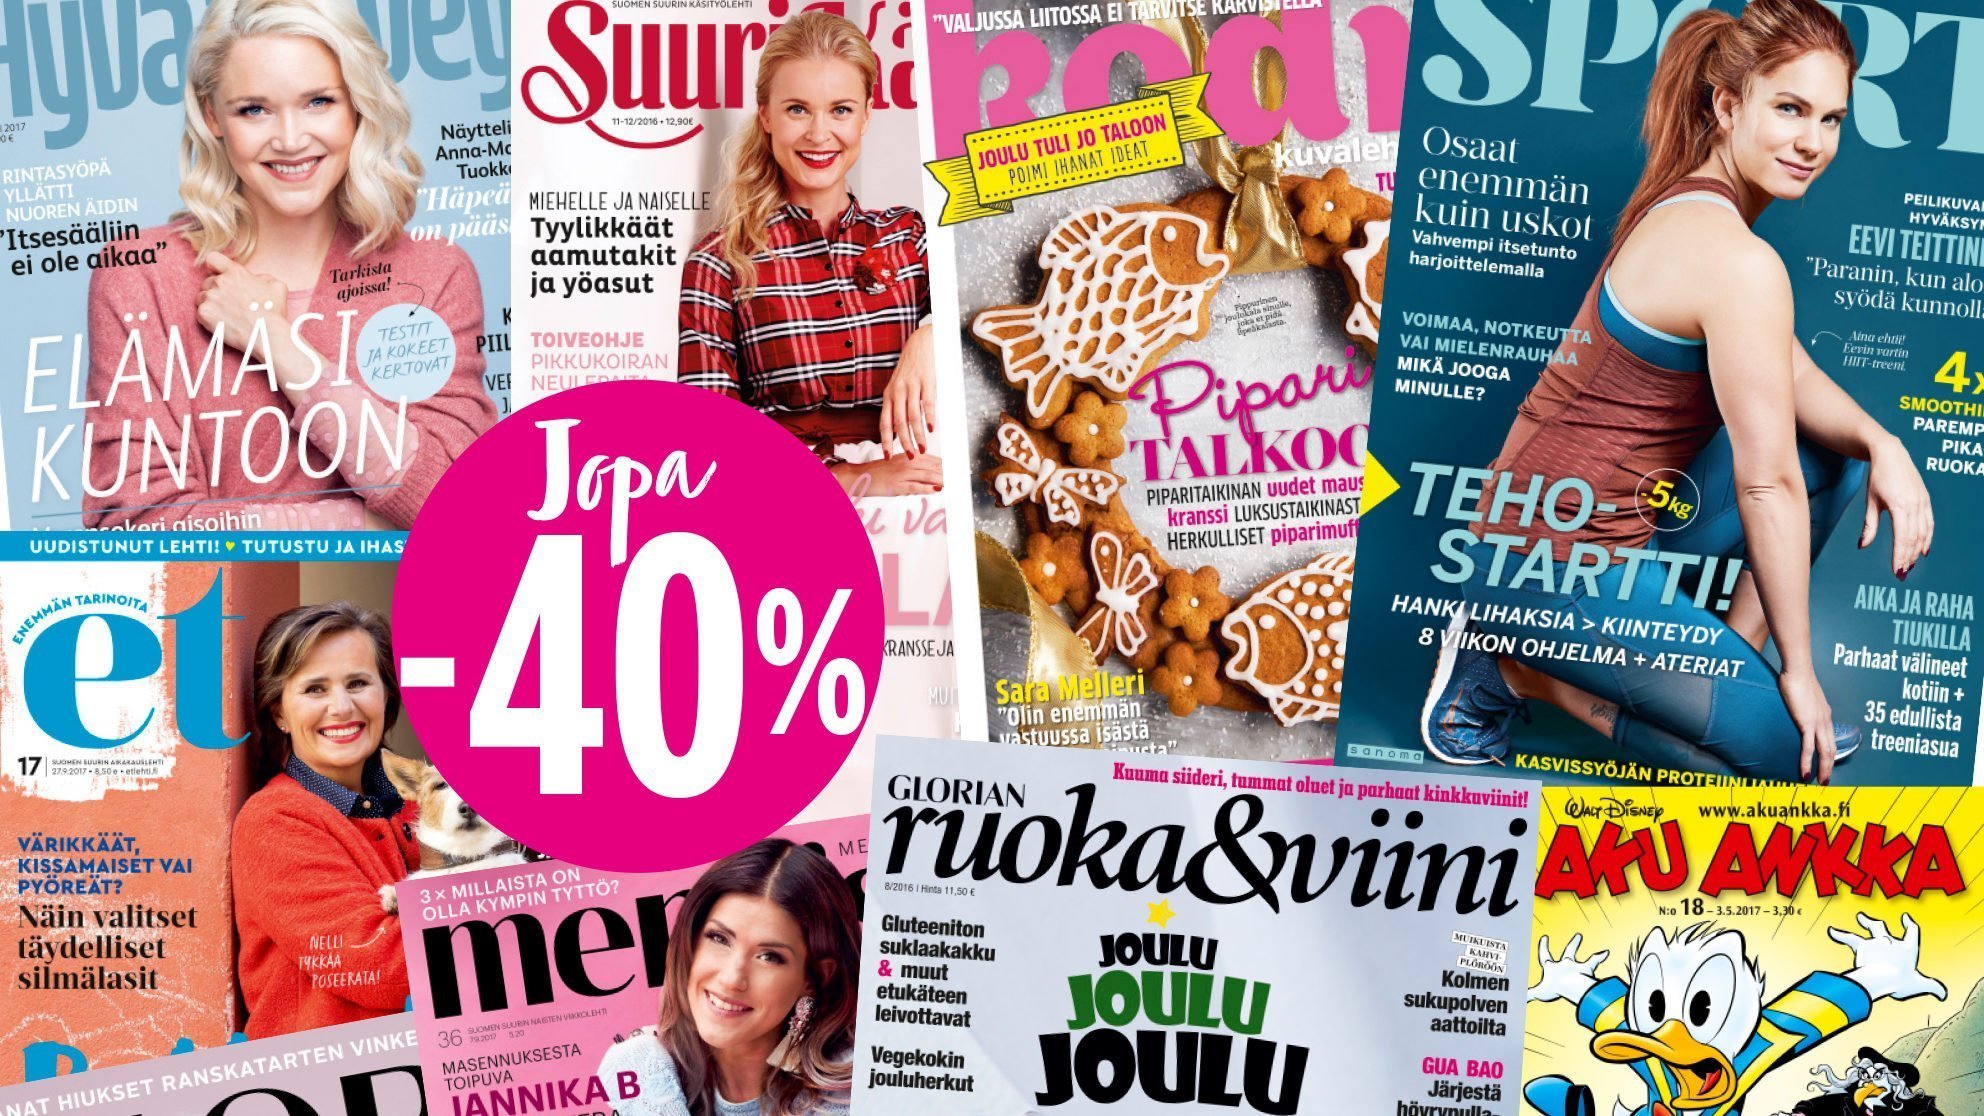 MAGAZINES FROM SANOMA MEDIA - SAVE UP TO 40% Helsingin yliopiston alumniyhdistys